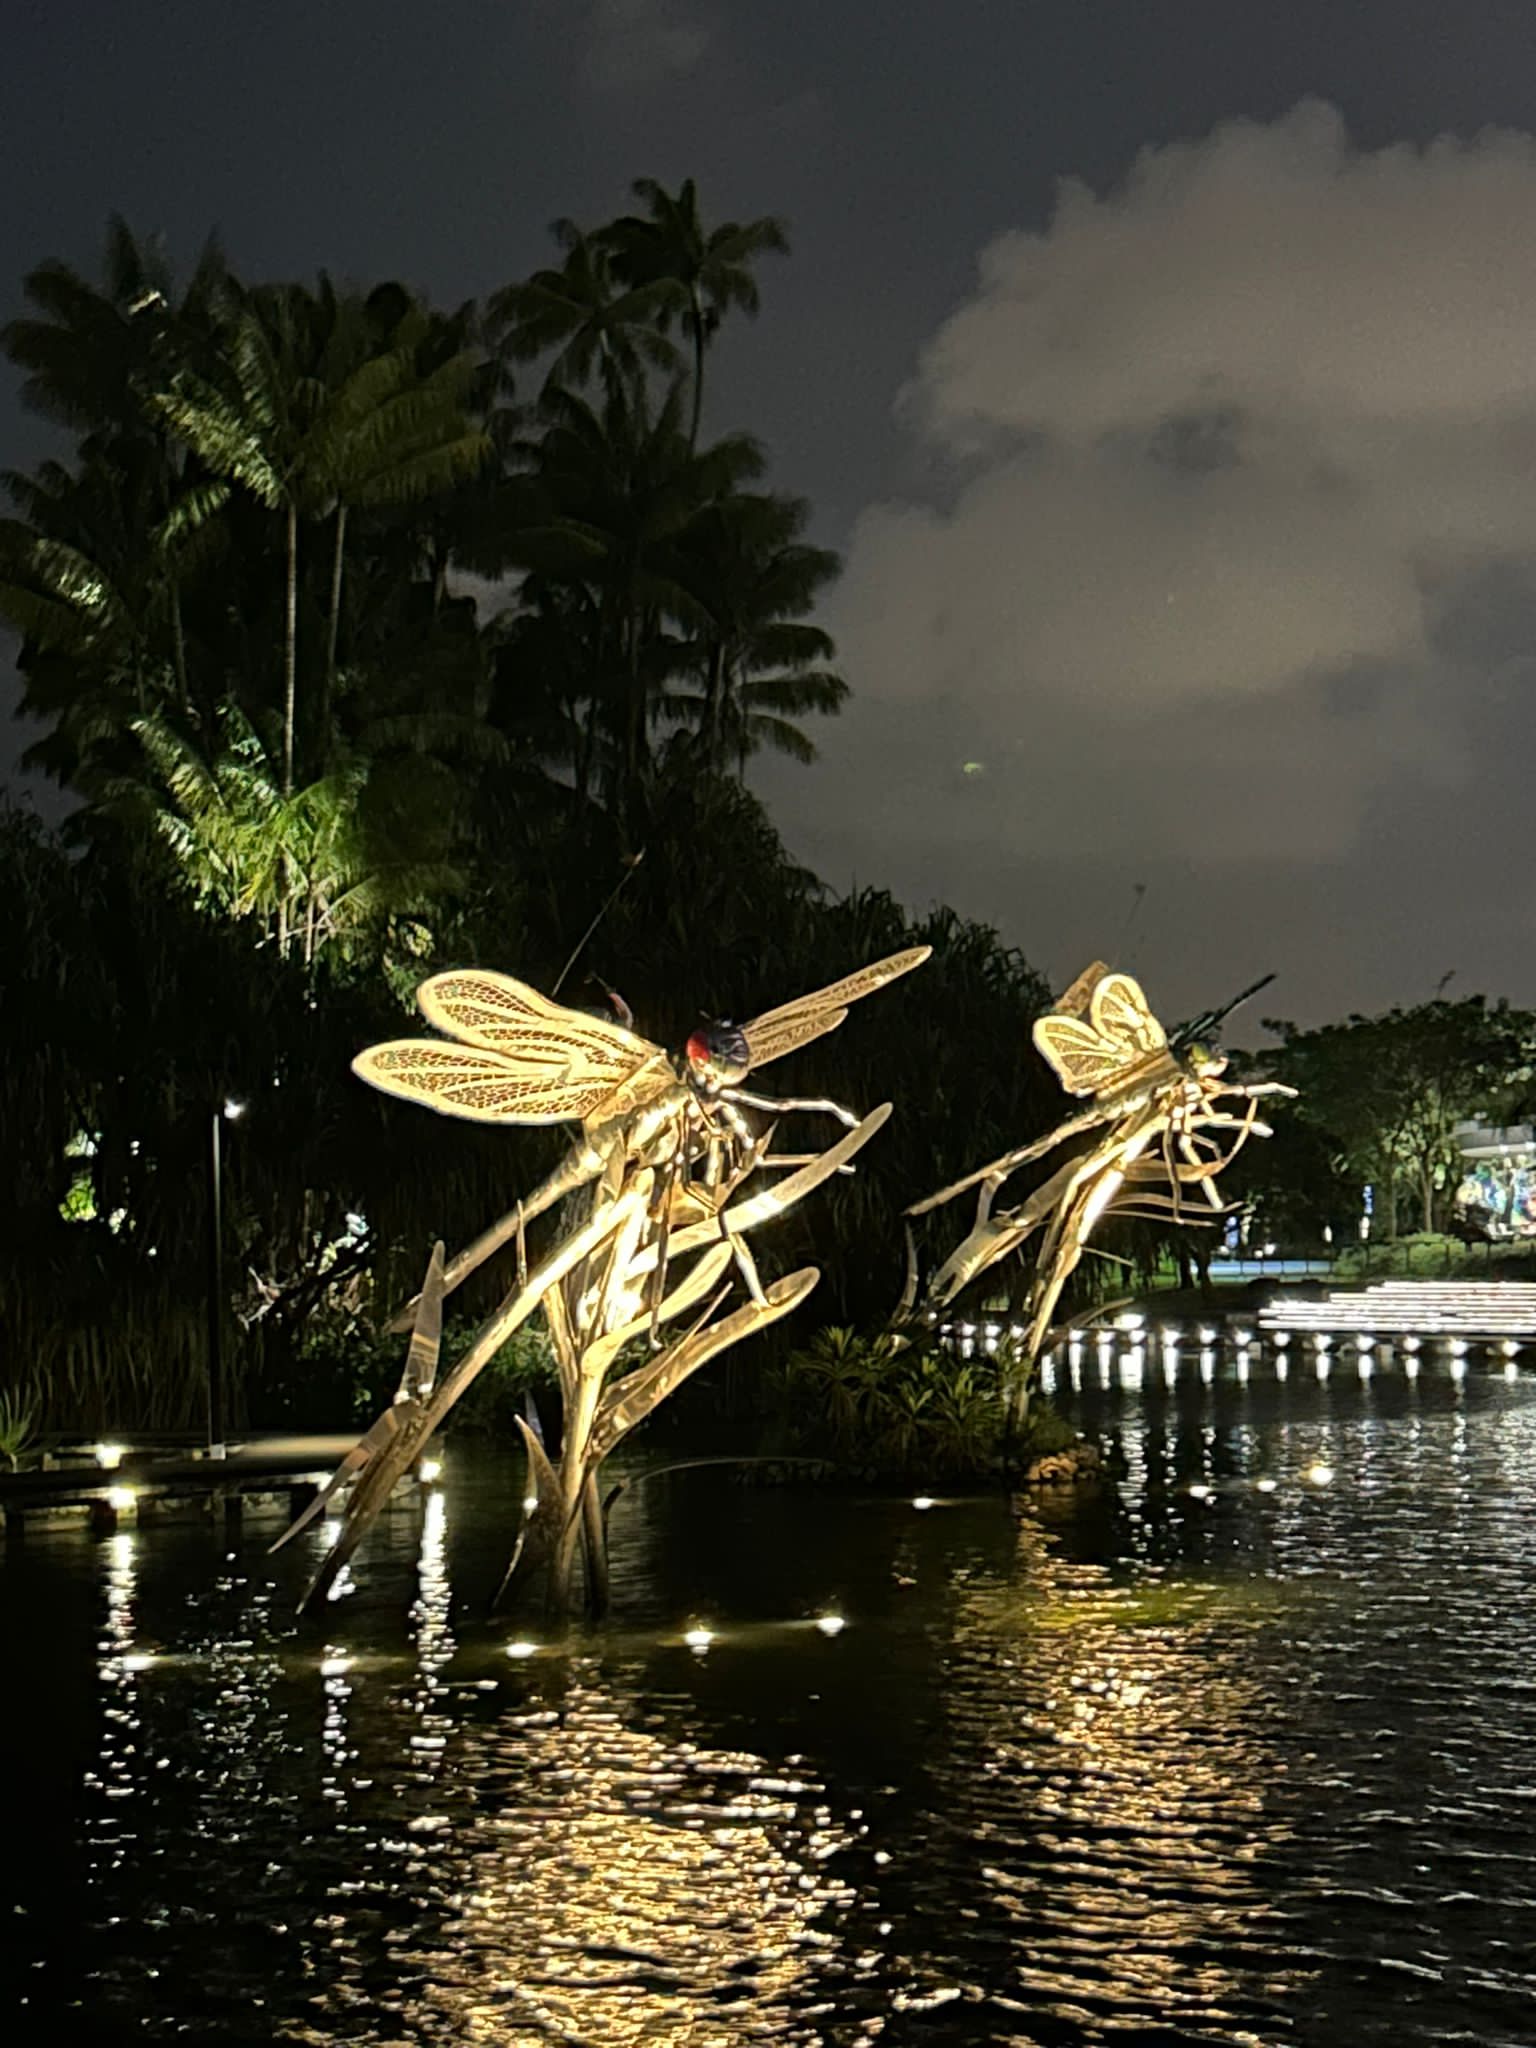 lit up dragonflies